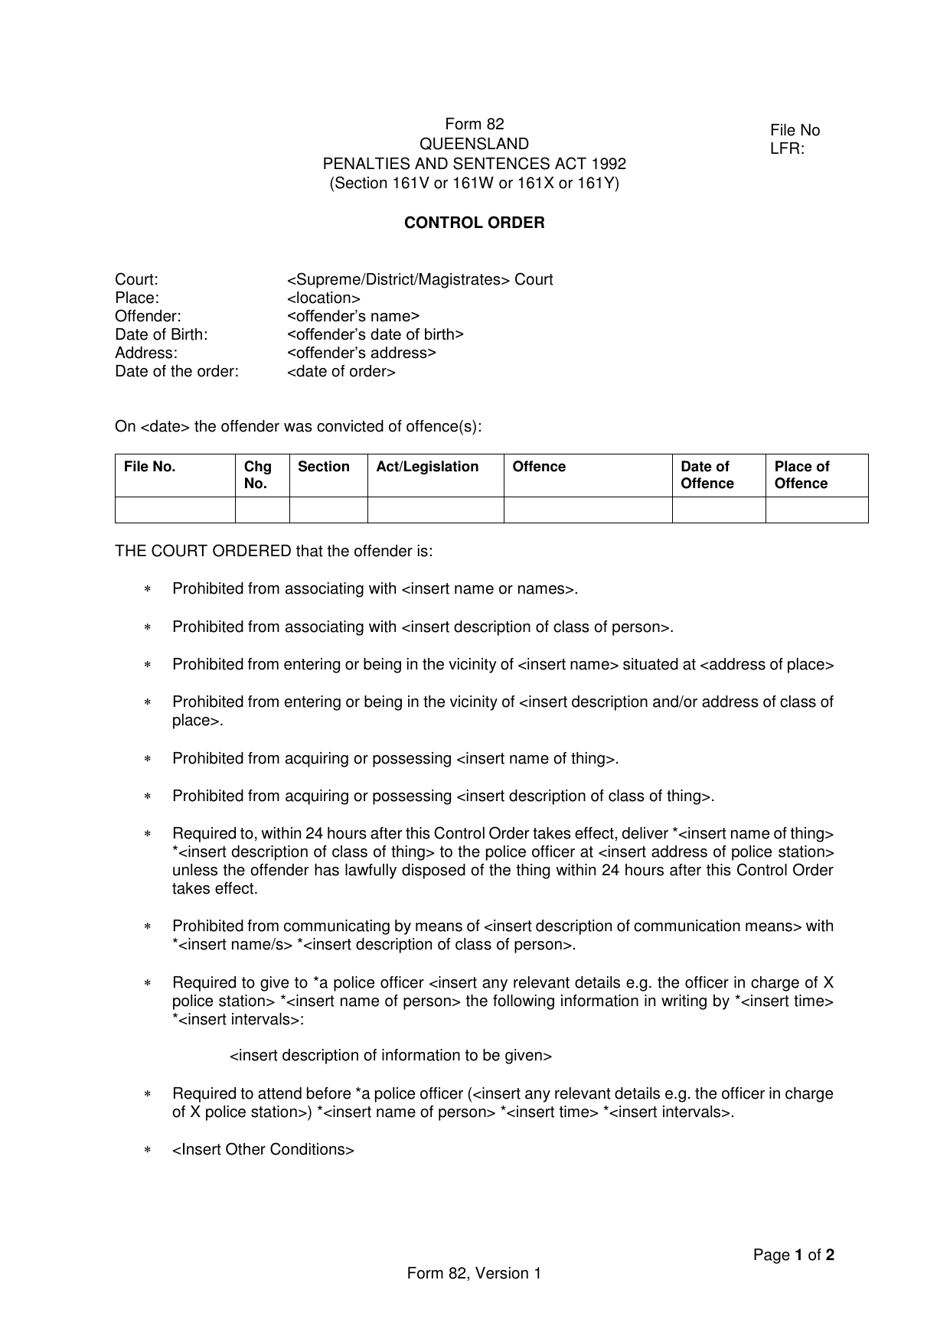 Form 82 Control Order - Queensland, Australia, Page 1